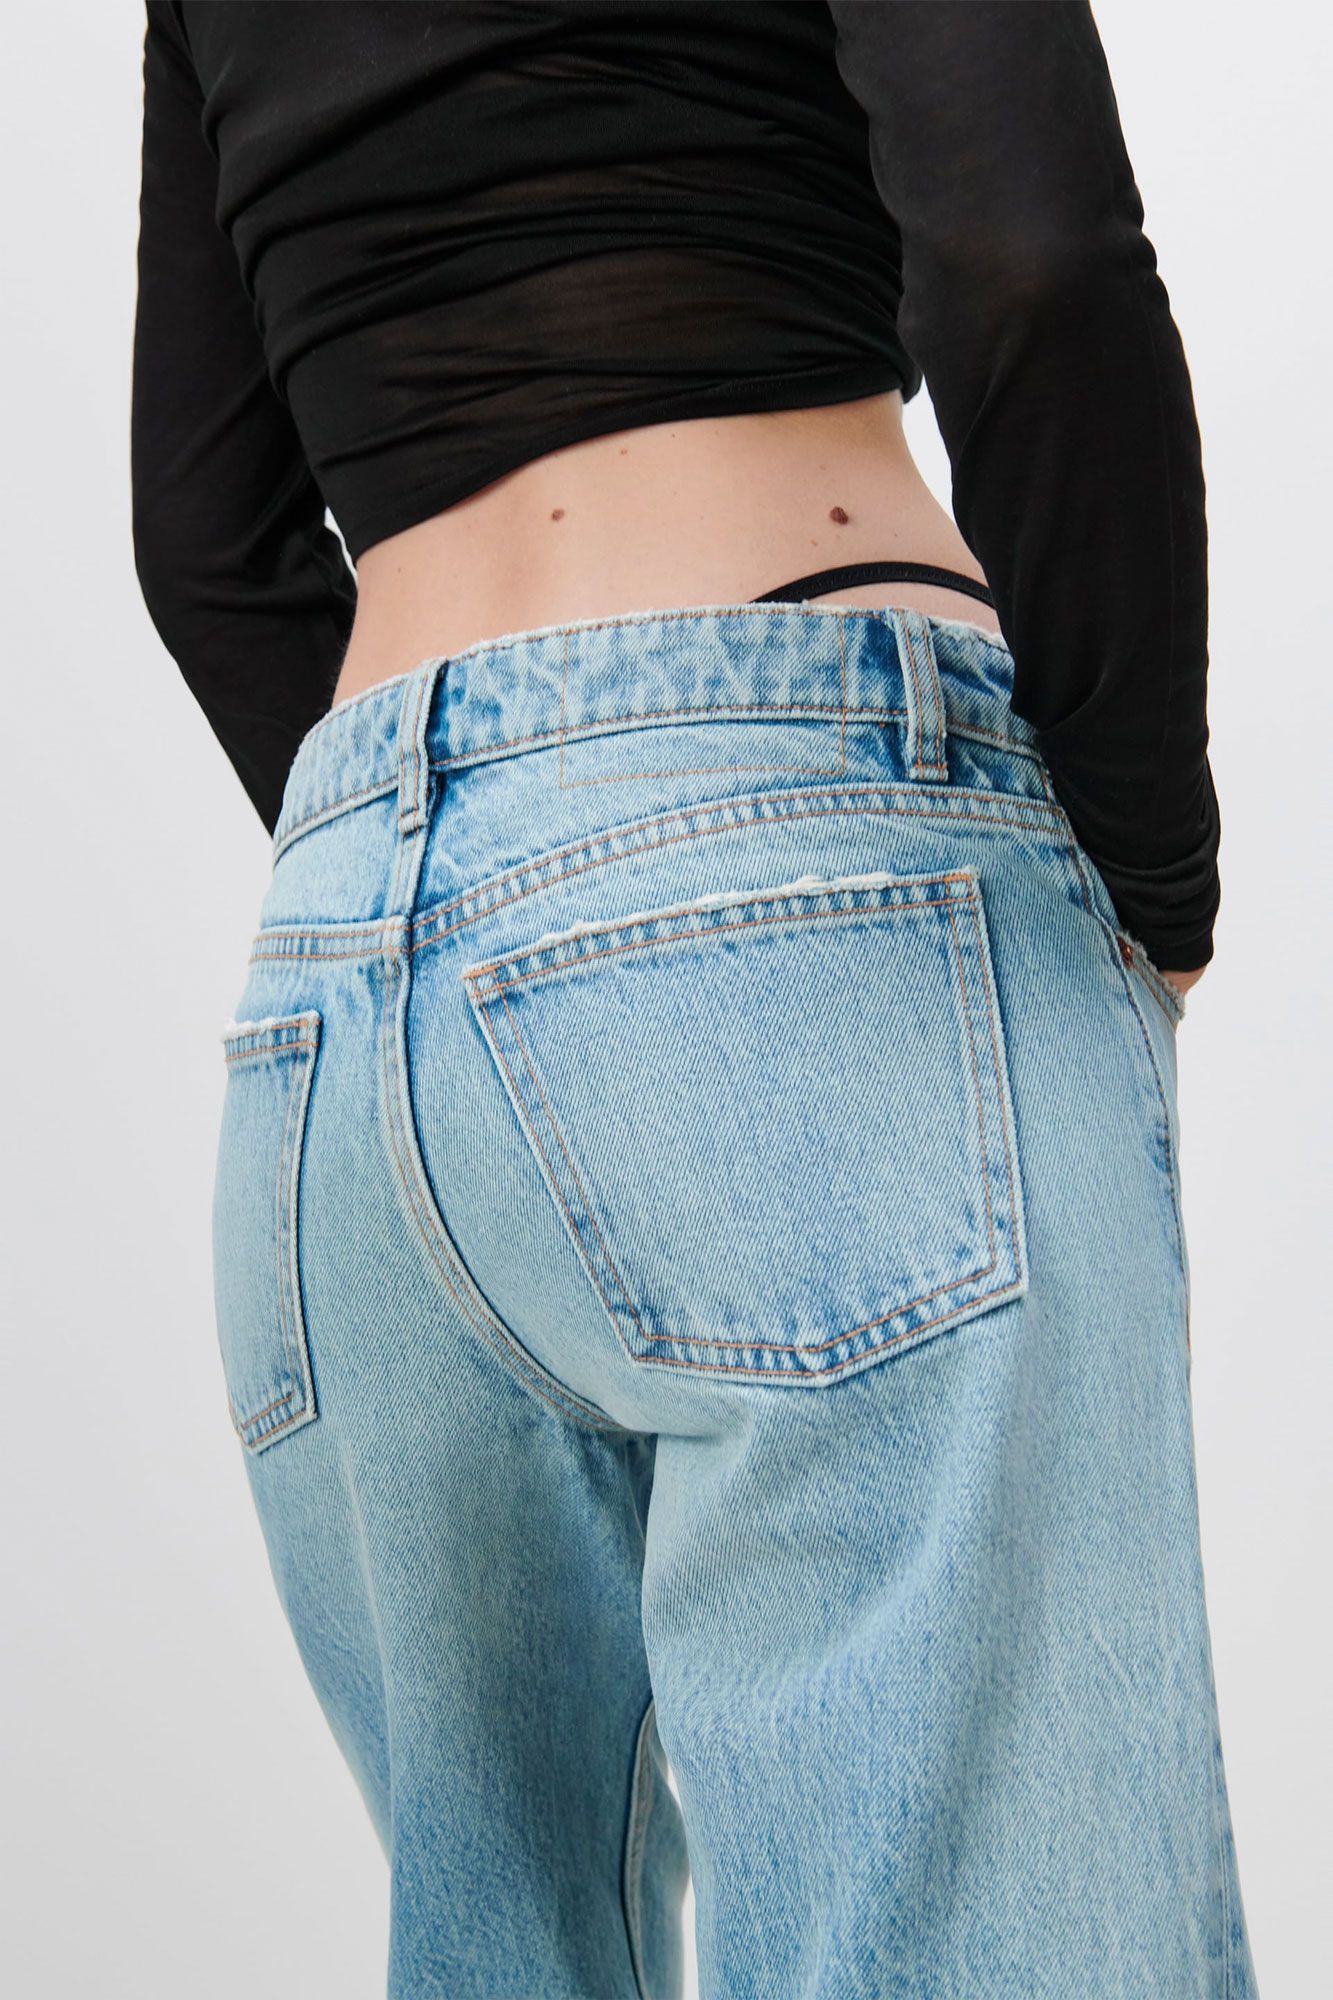 Jeans Sueltos De Tiro Bajo Para Mujer [u]